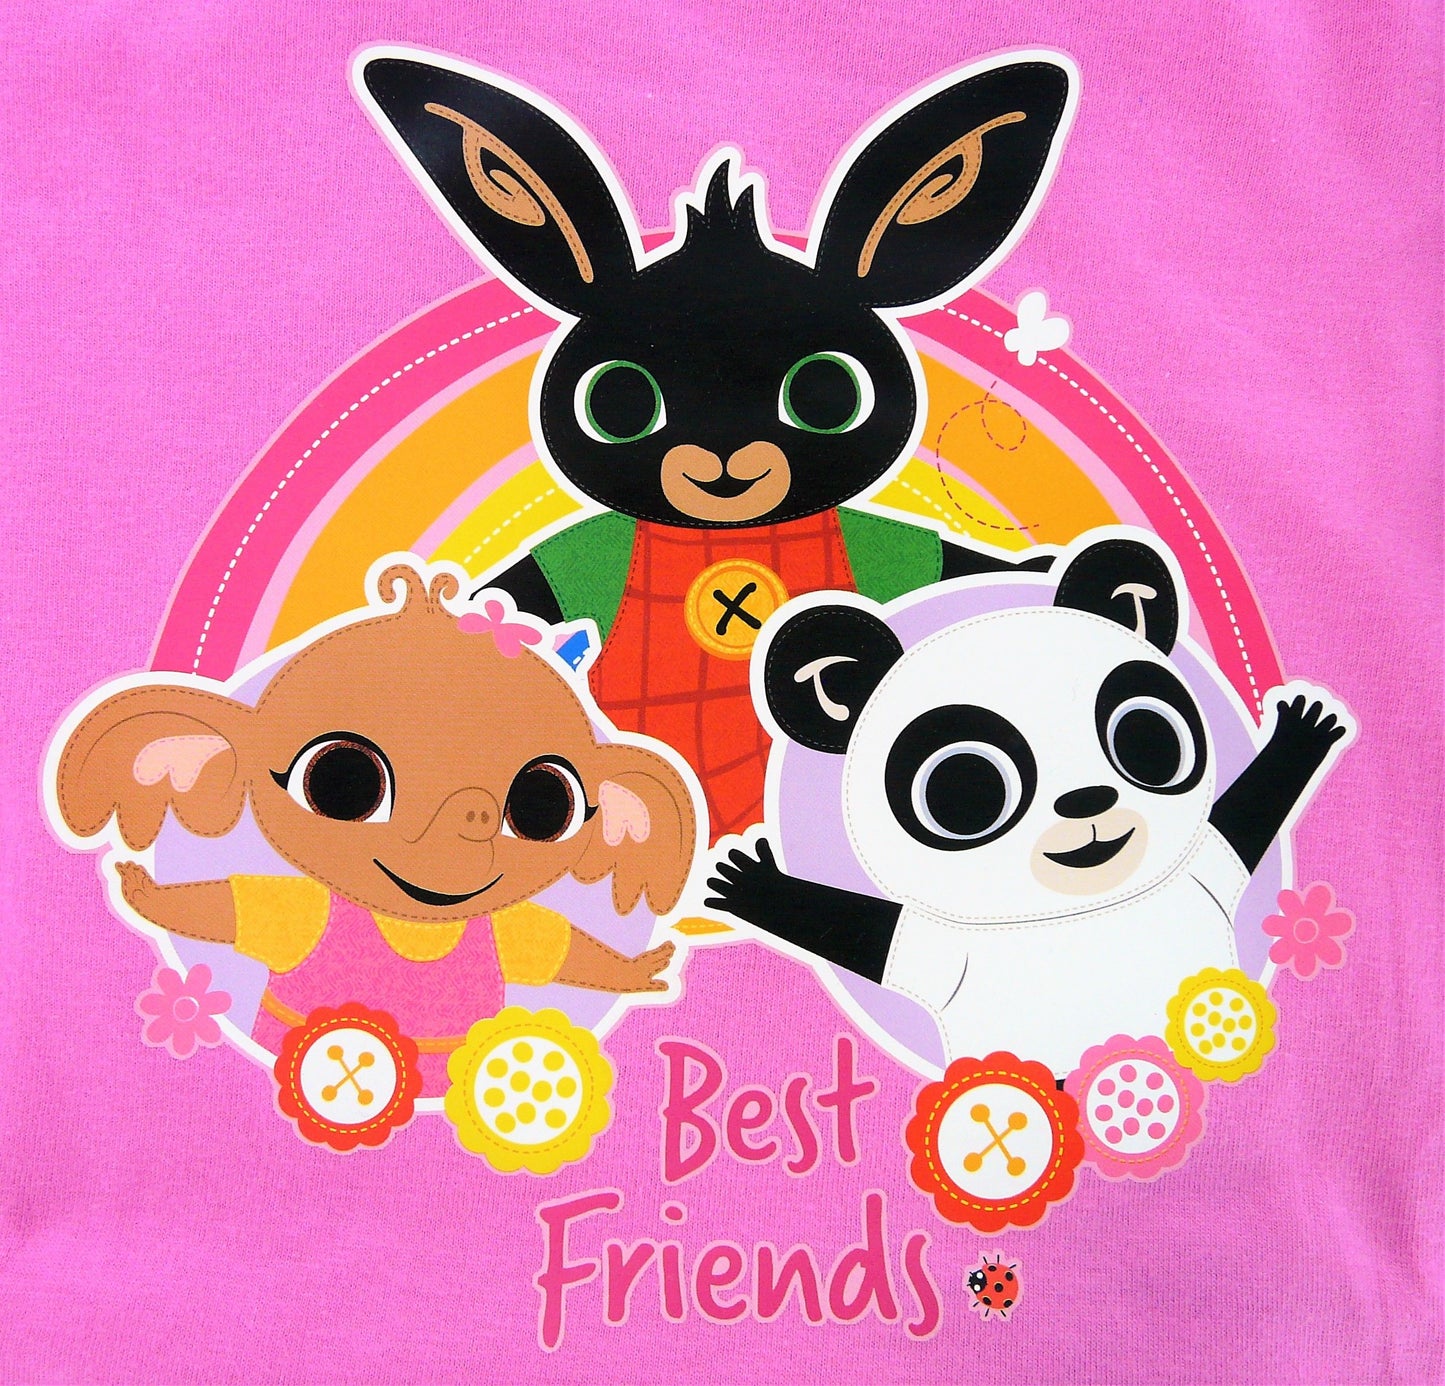 Bing " Best Friends" Girl's Pyjamas